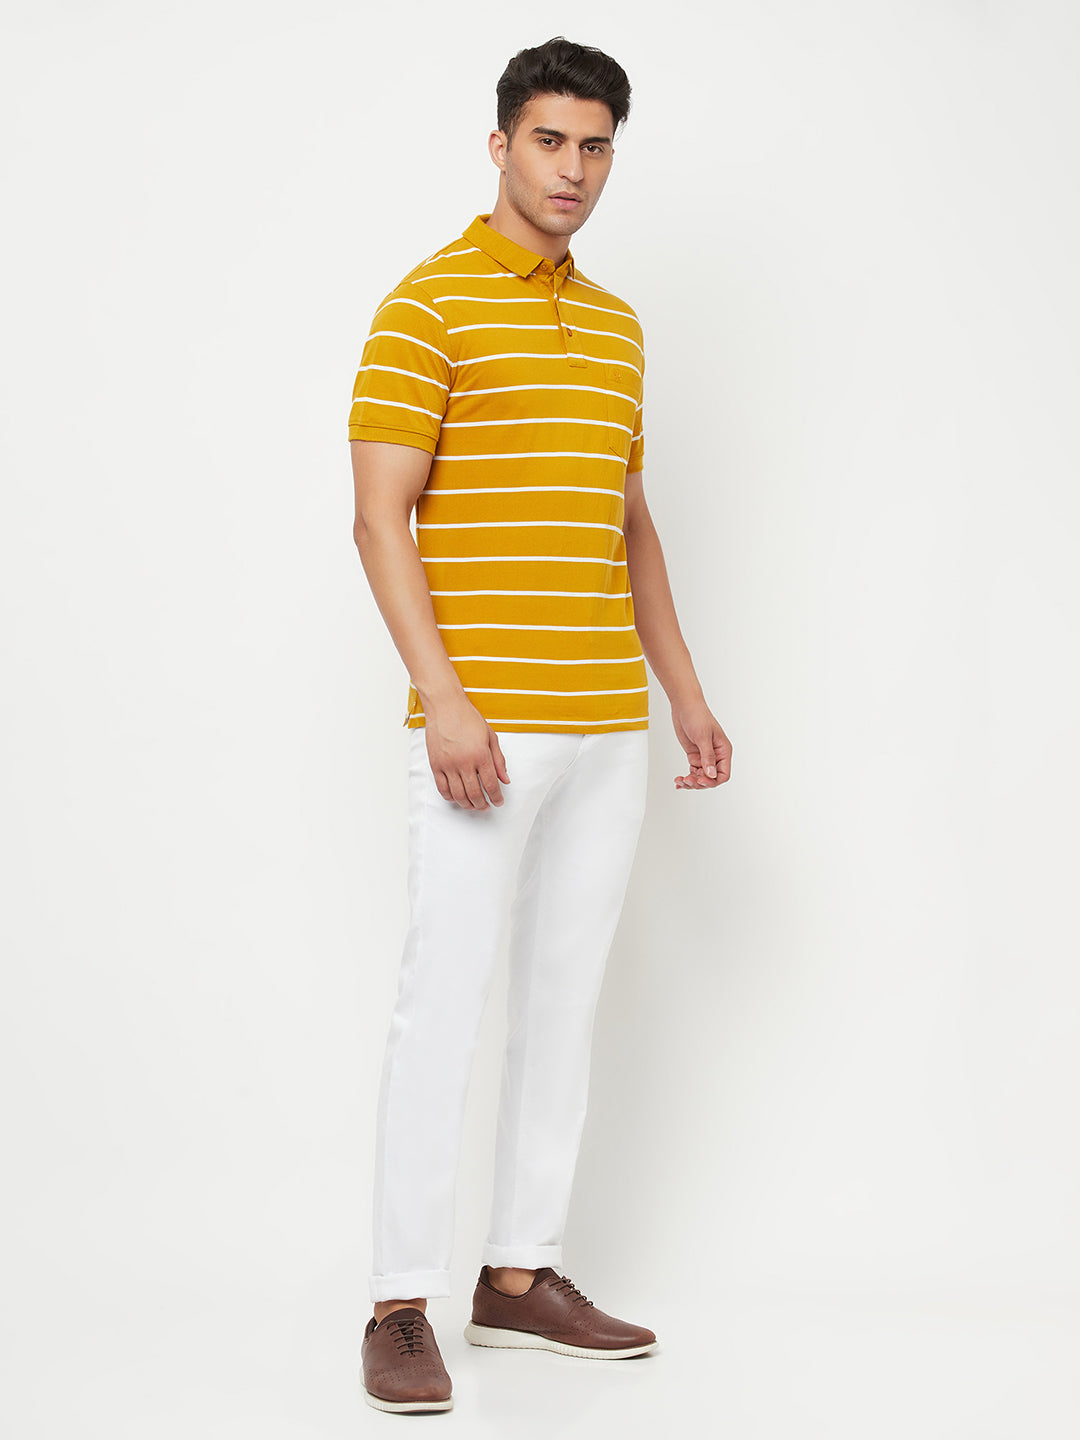 Mustard Striped Polo T-Shirt - Men T-Shirts